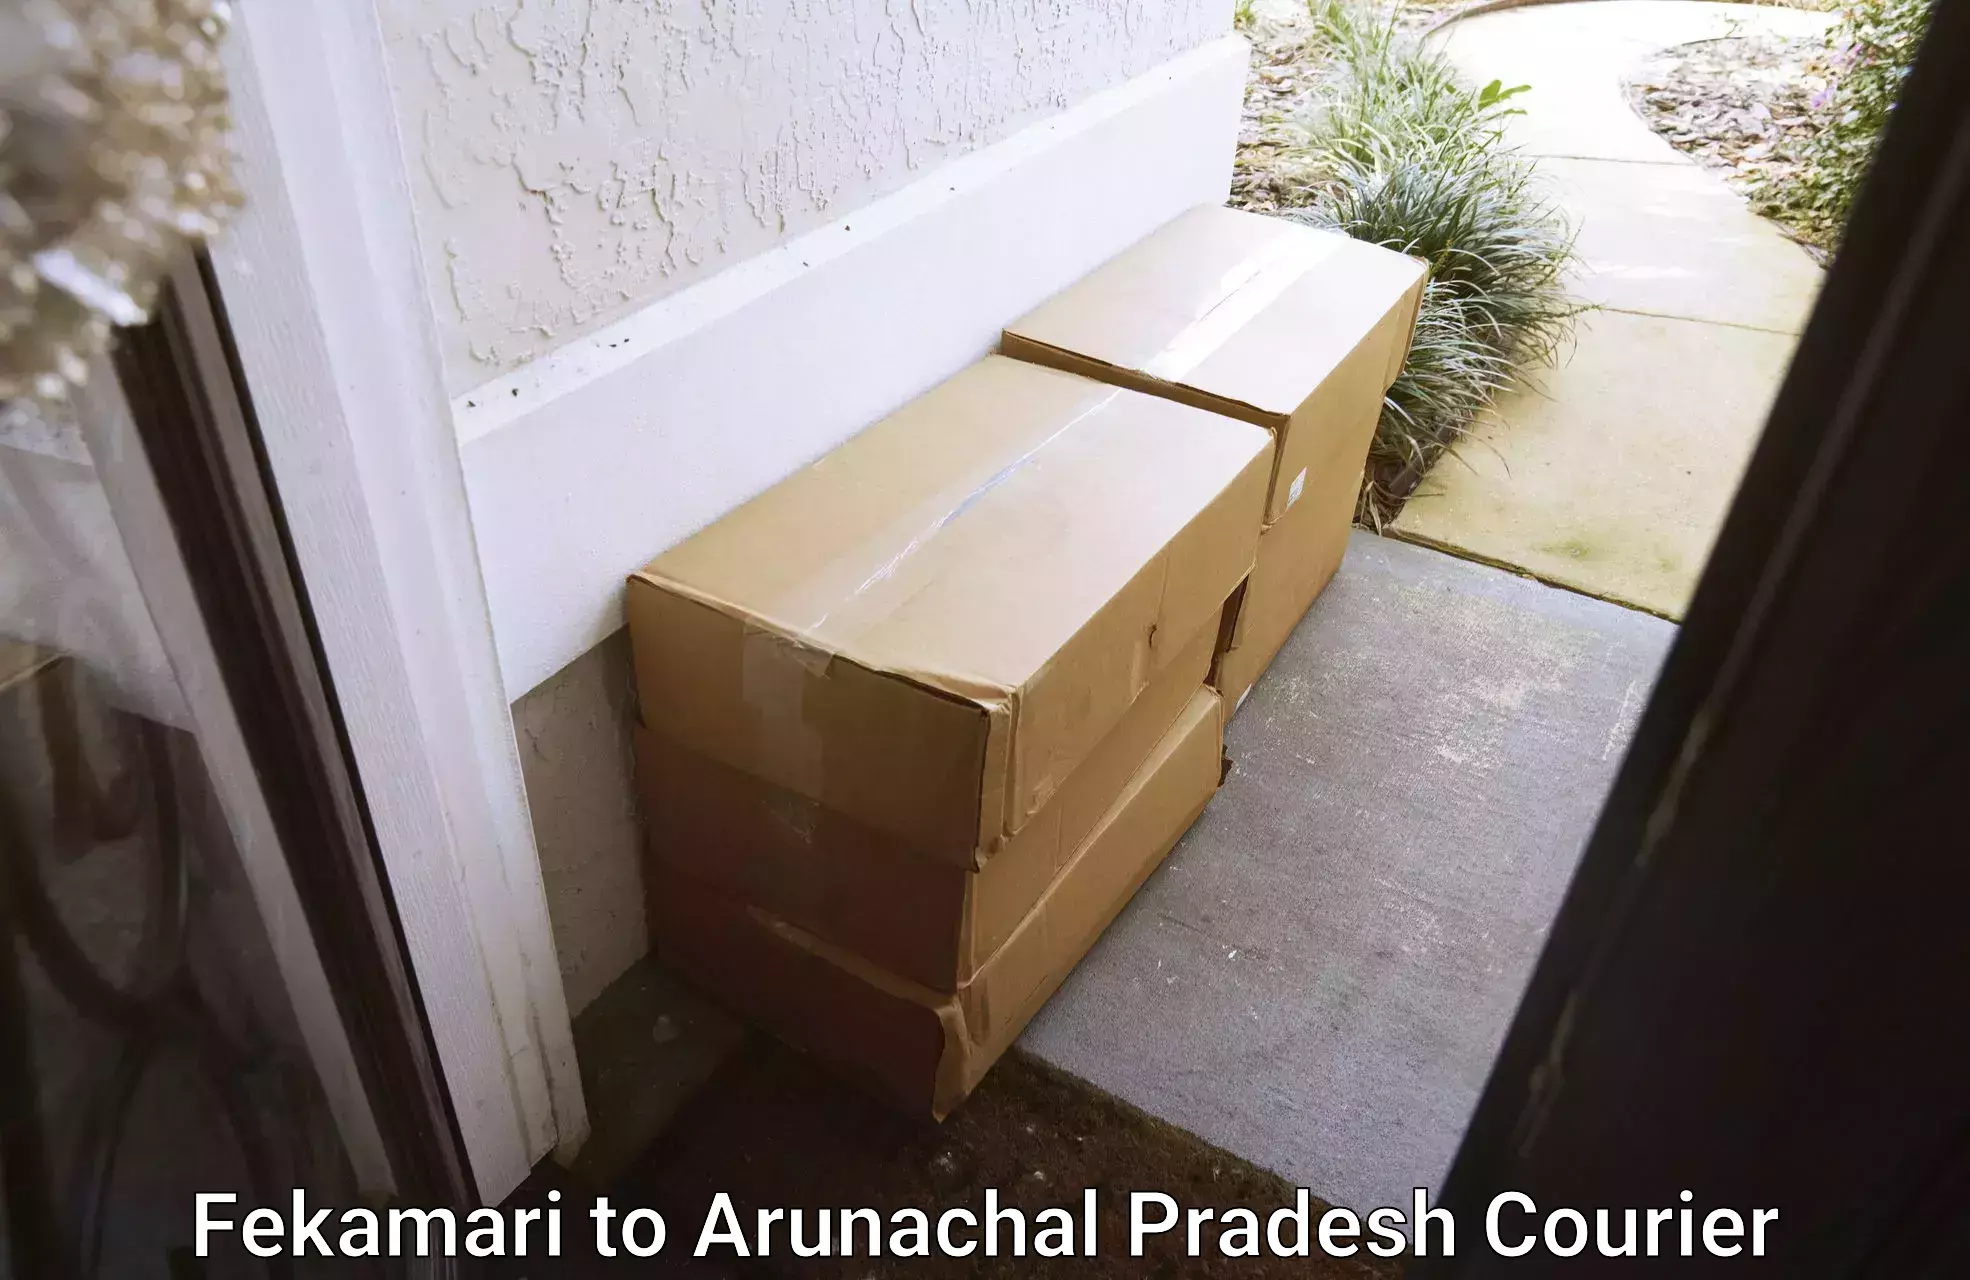 High-speed parcel service Fekamari to Arunachal Pradesh